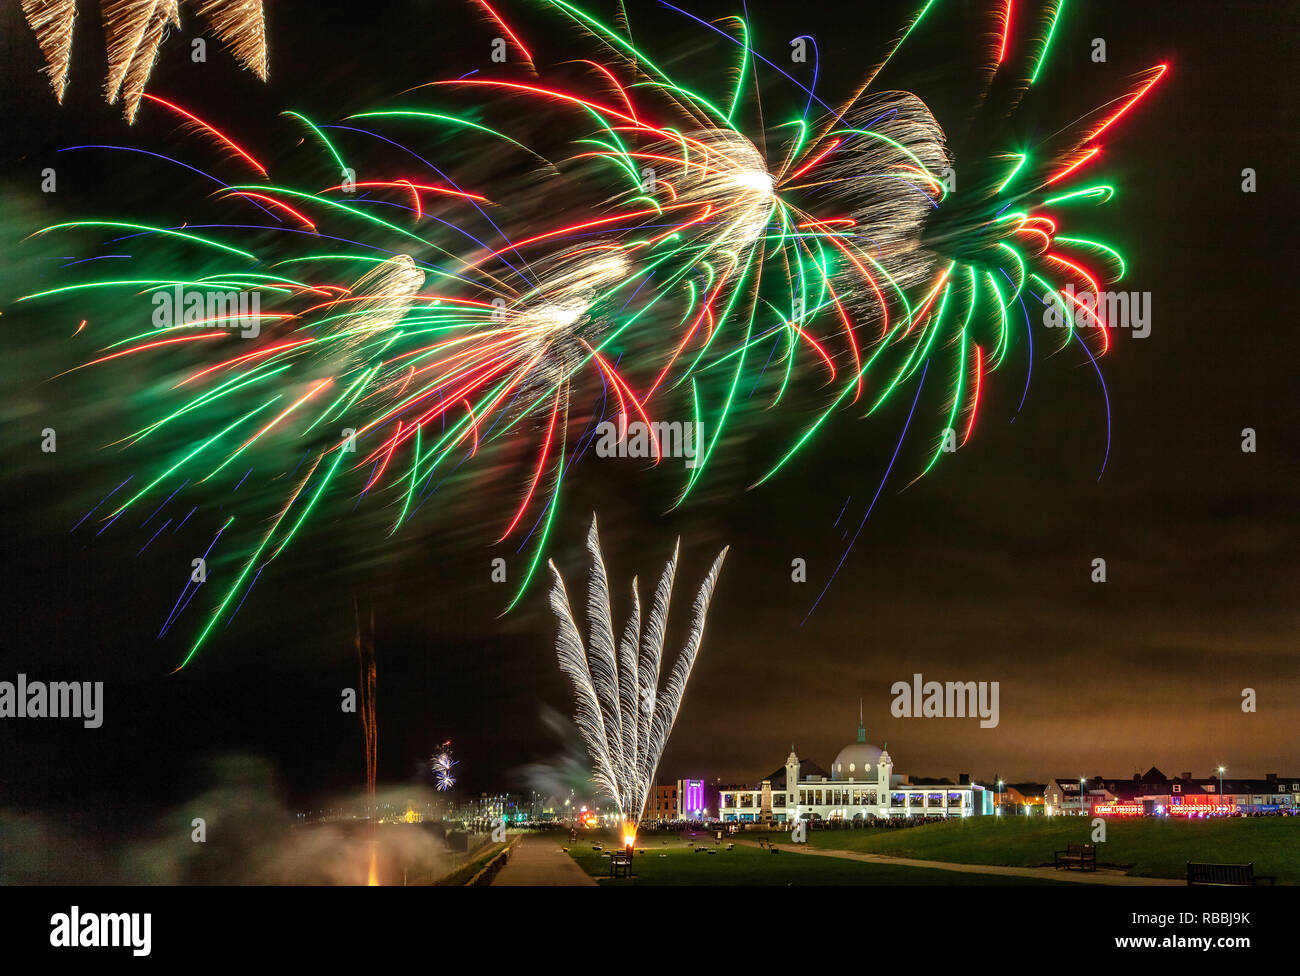 New Year's Eve fireworks above Spanish City, Whitley Bay, North Tyneside, United Kingdom Stock Photo